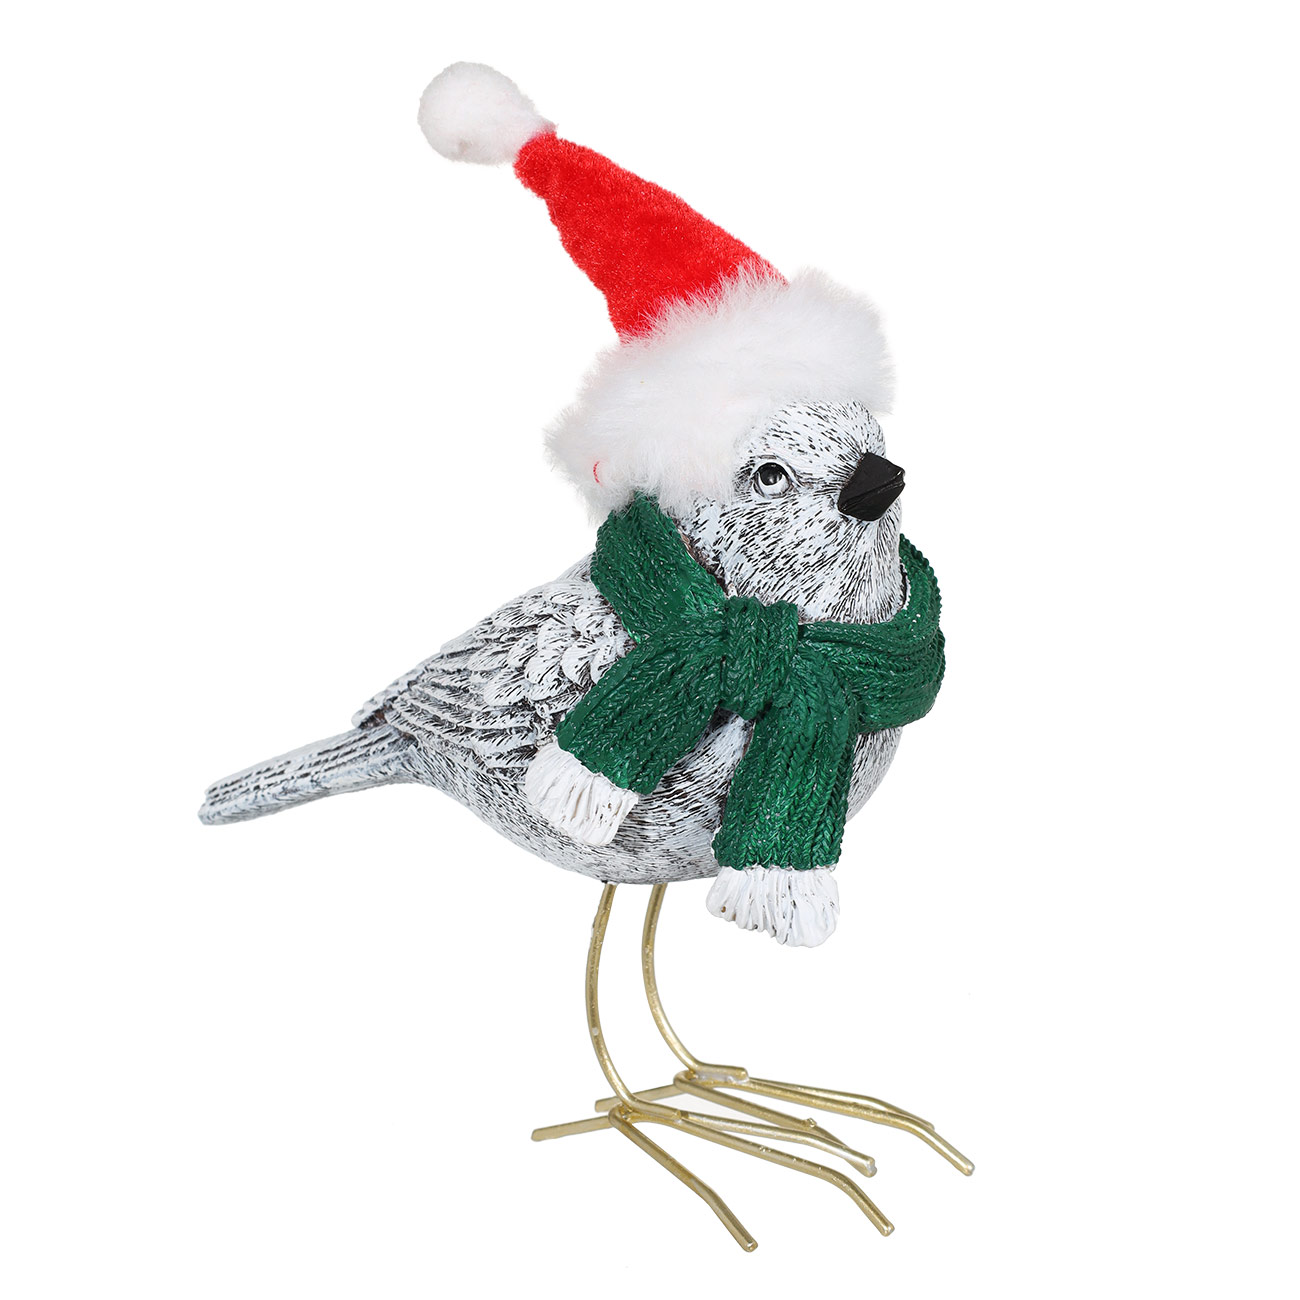 Статуэтка, 14 см, полирезин/металл, Птица в красной шапке, Christmas style - фото 1